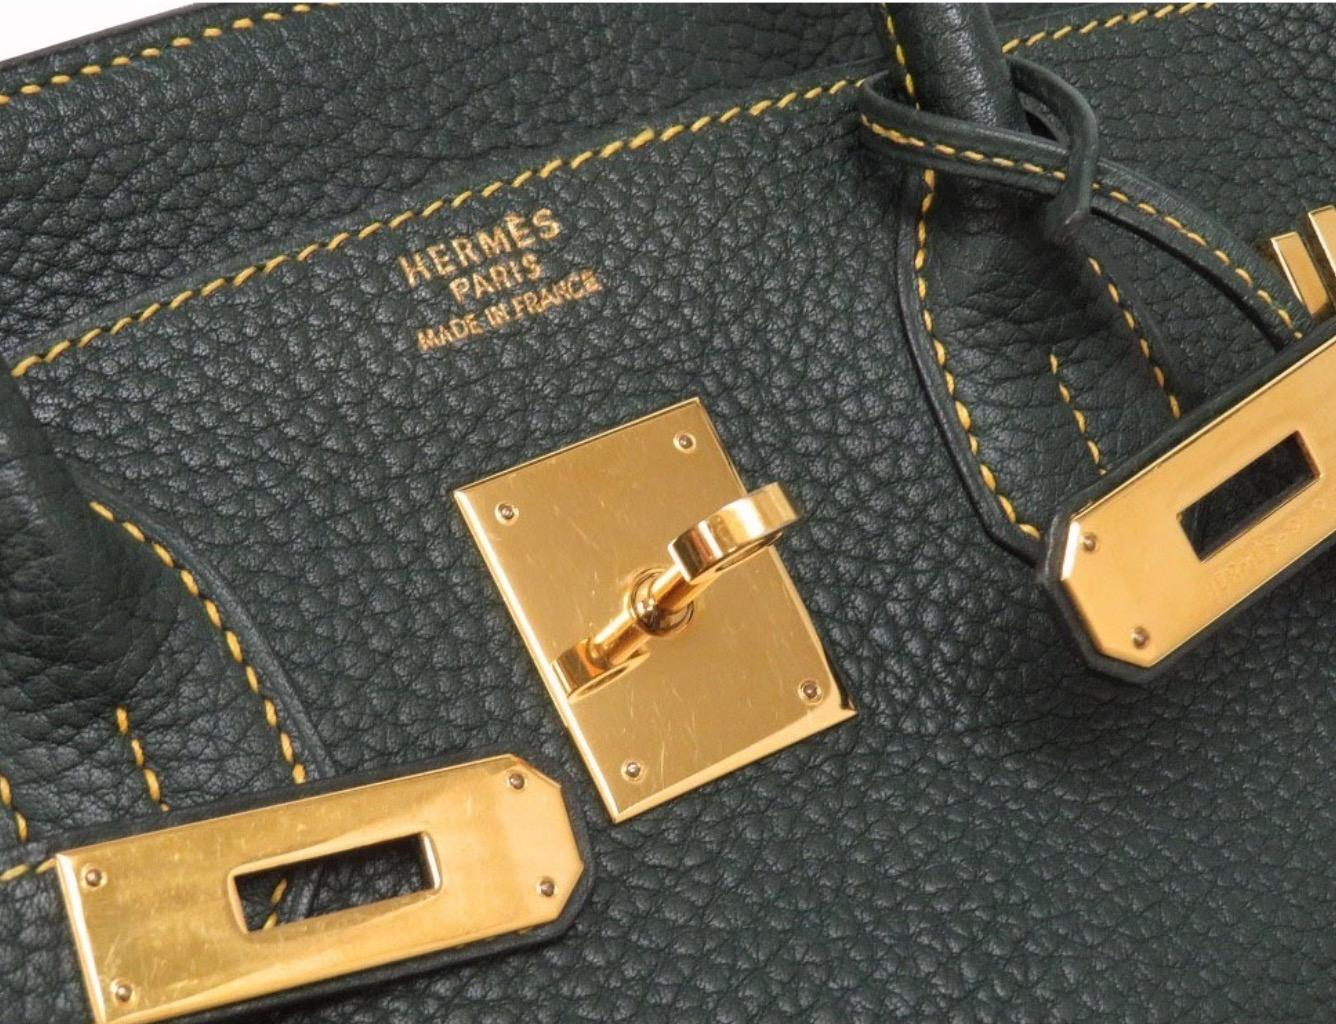 Black Hermes Birkin 30 Special Green Yellow Gold Top Handle Satchel Carryall Tote Bag